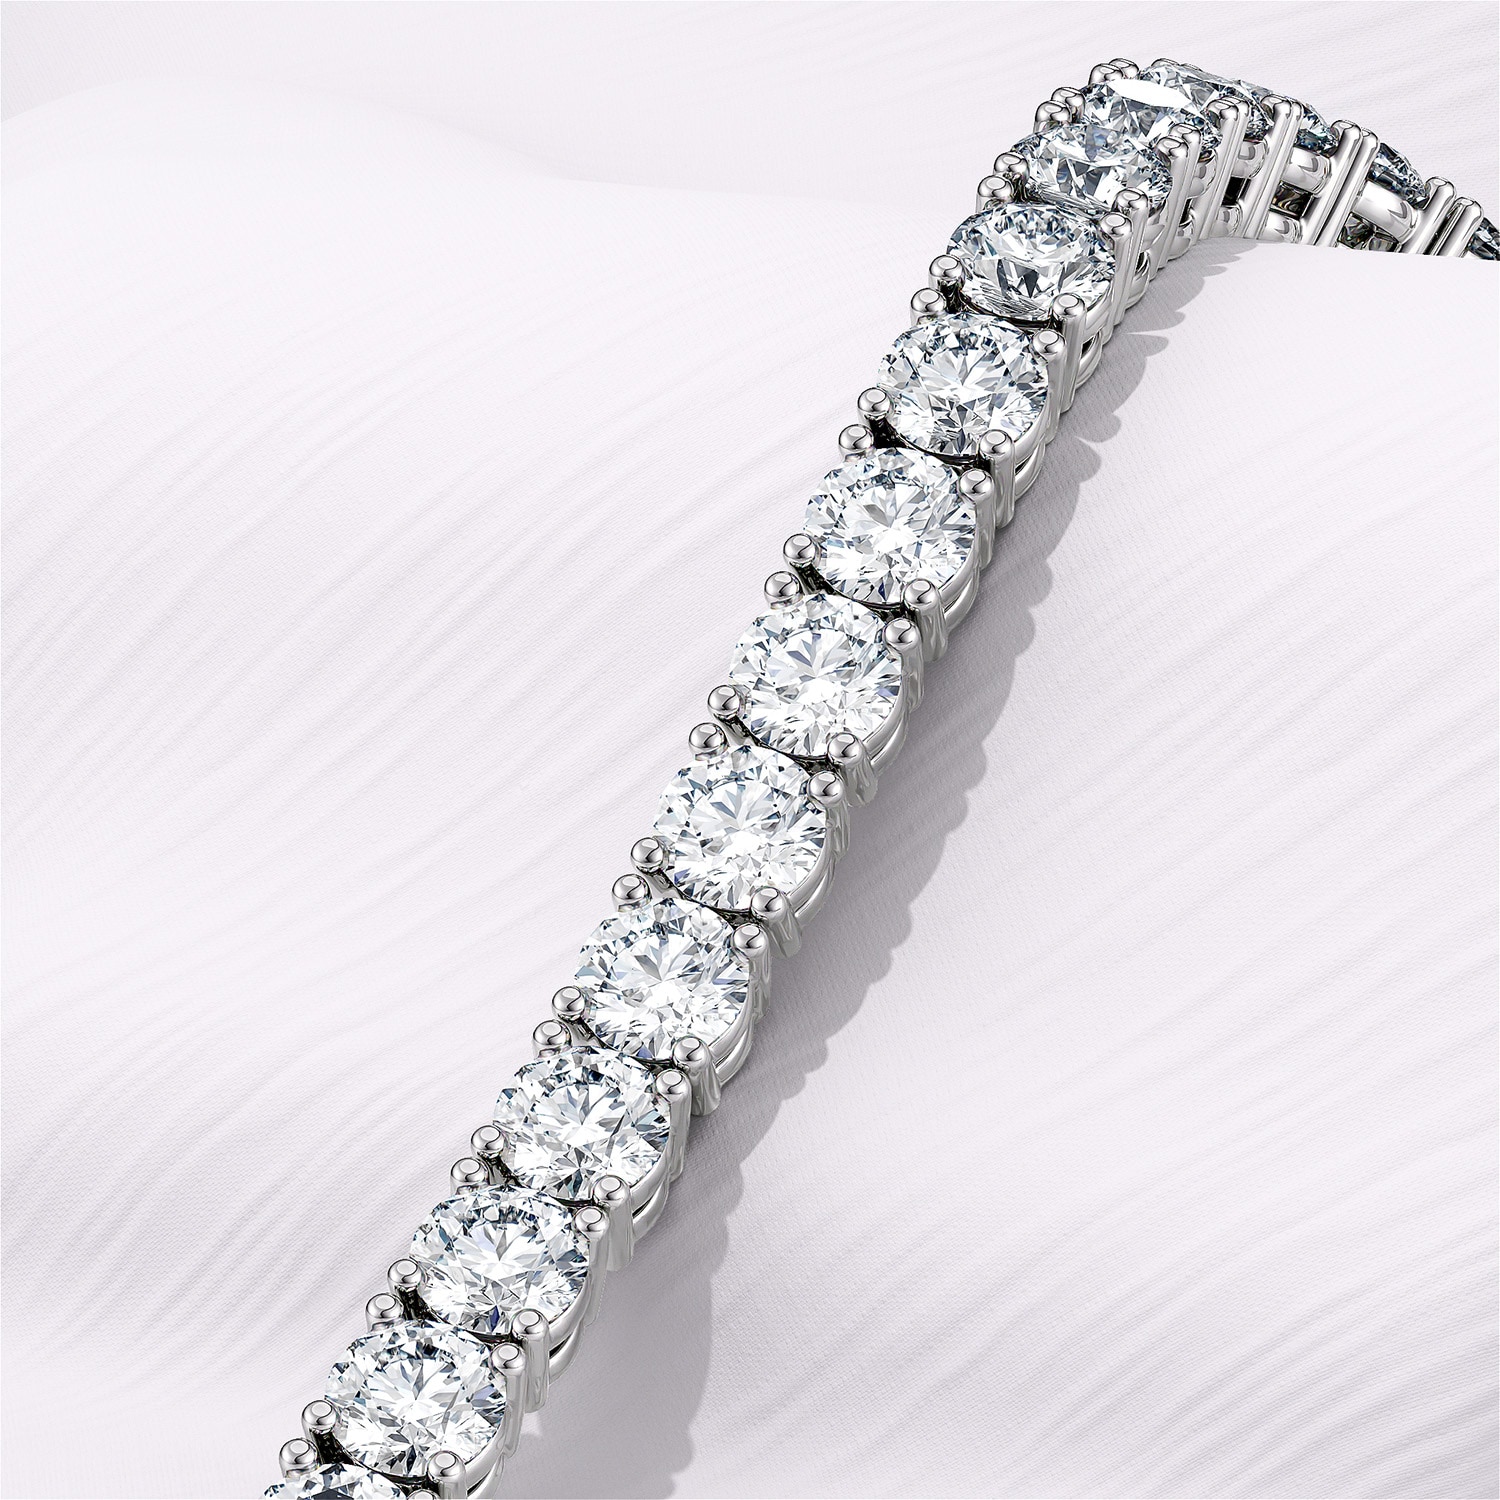 10 CT. T.W. Diamond Tennis Bracelet in 10K White Gold | Zales Outlet